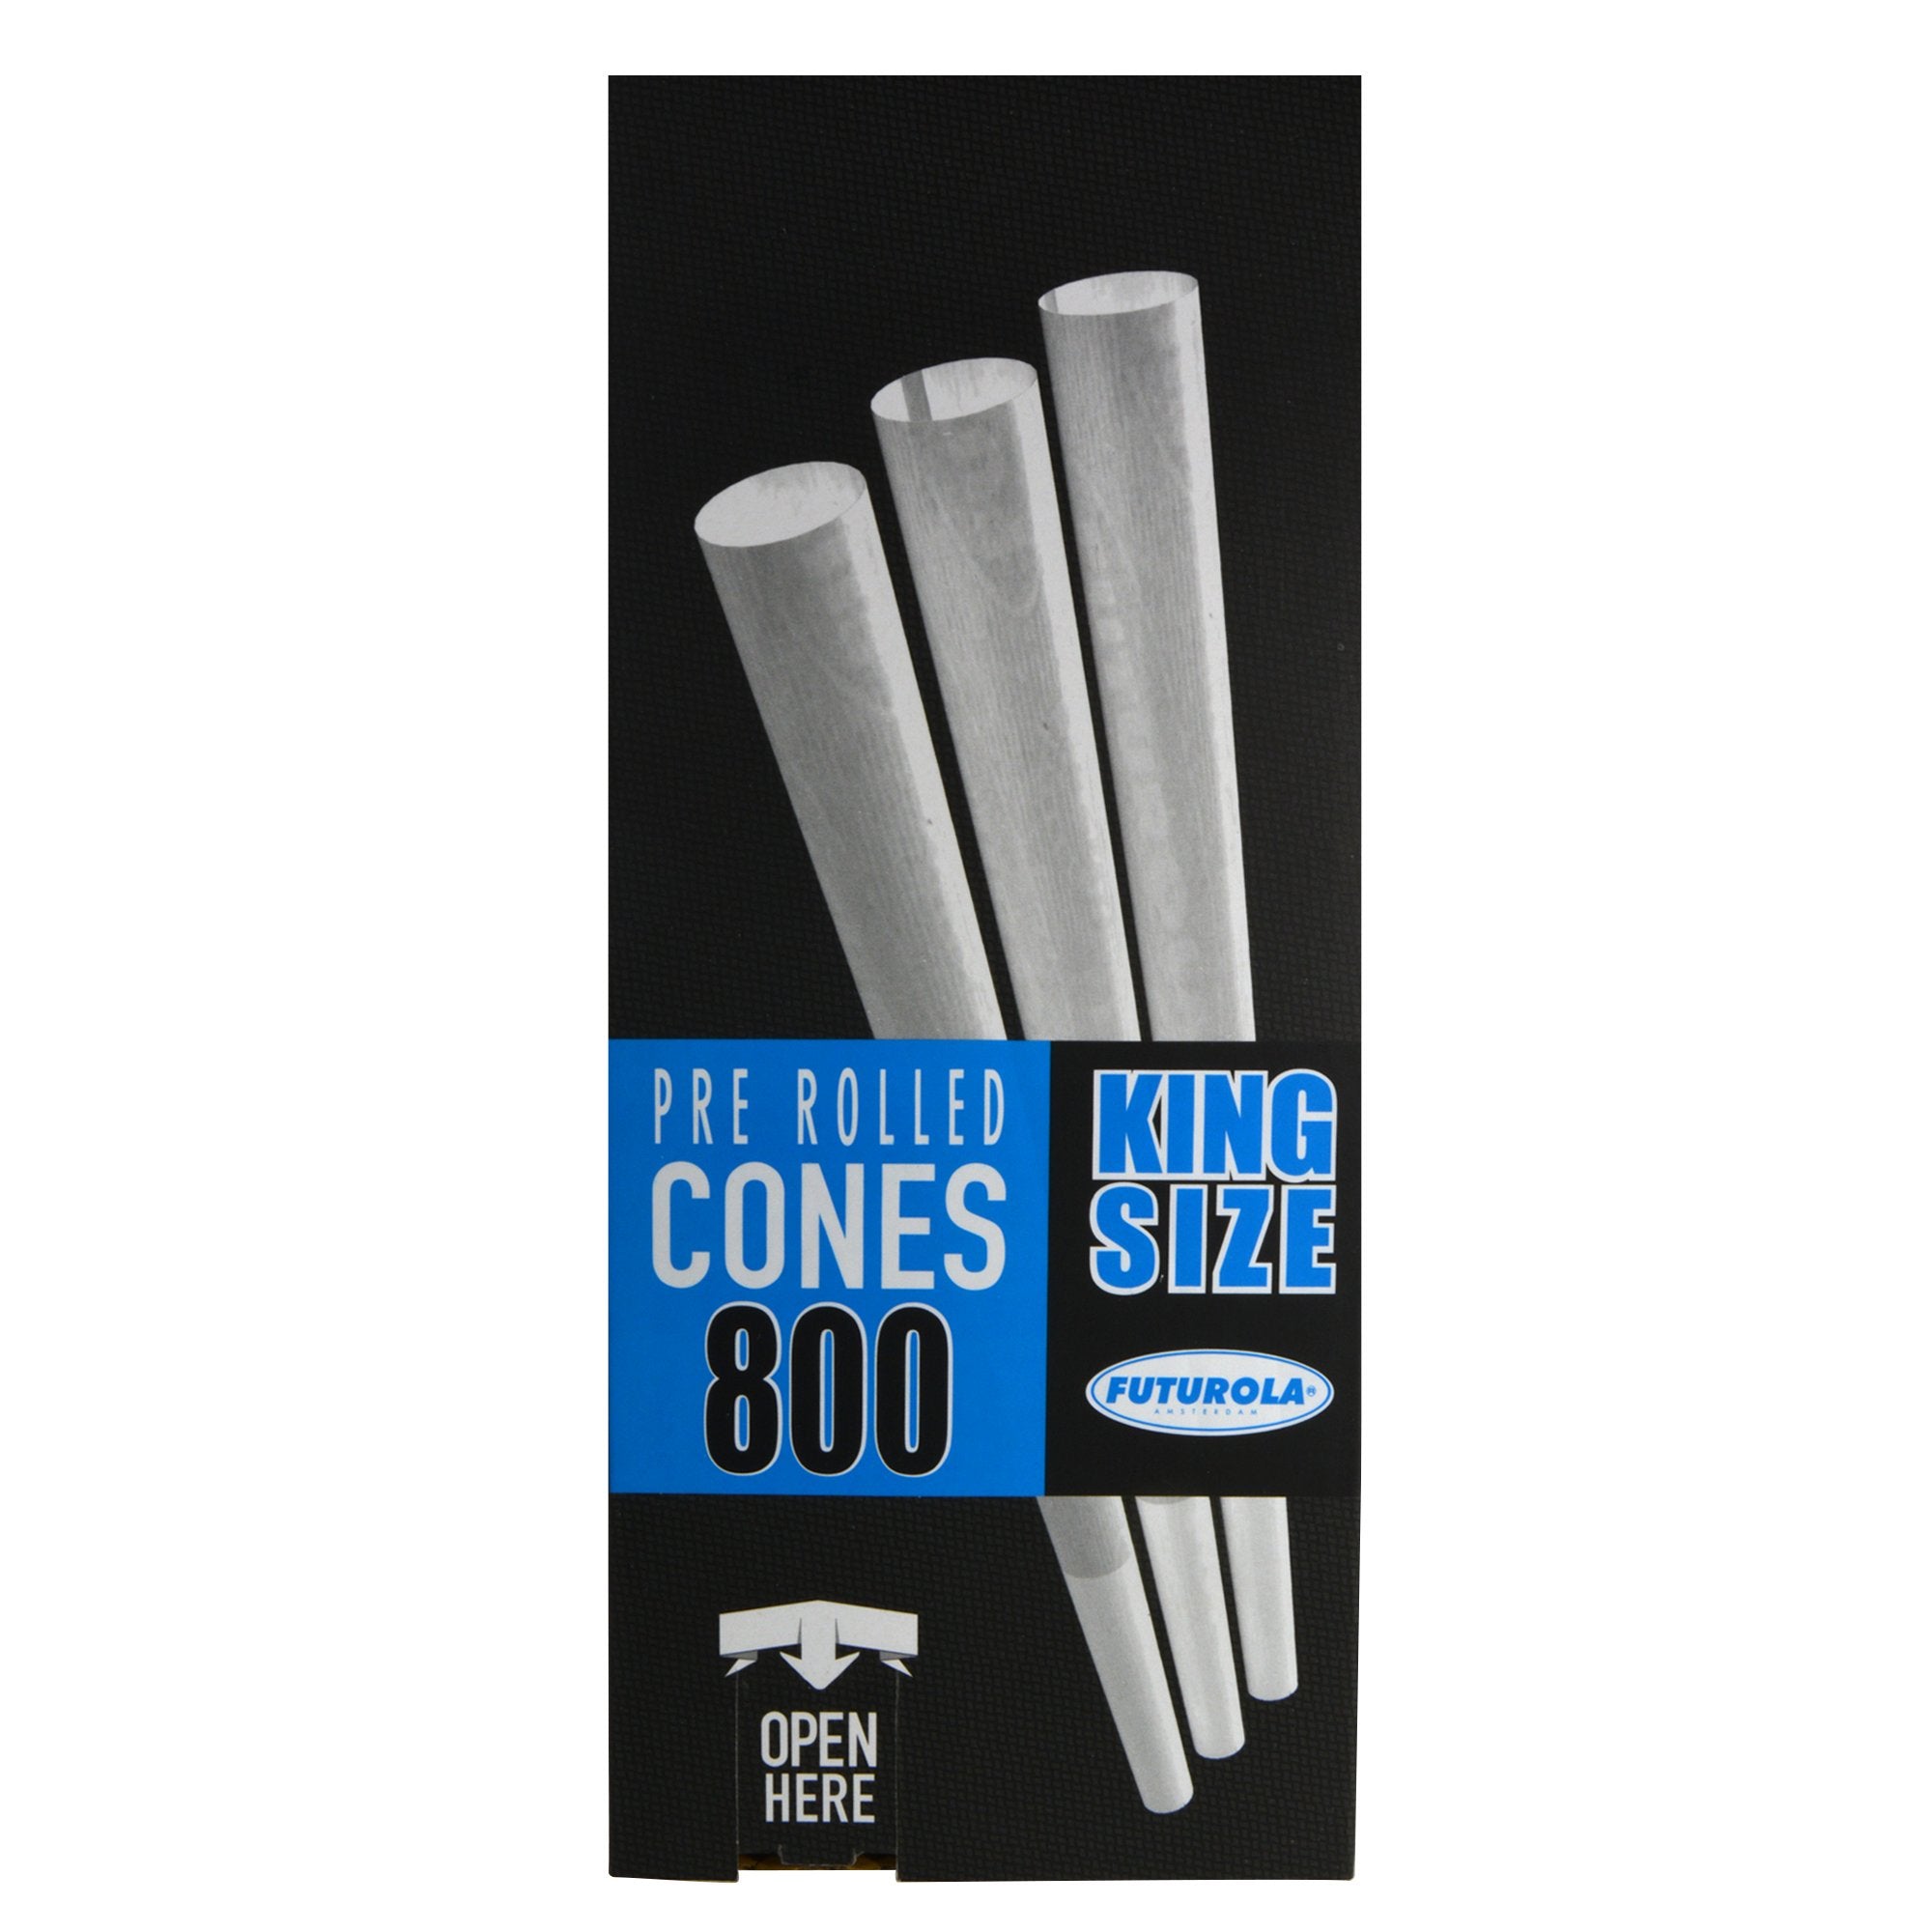 FUTUROLA | King Size Pre-Rolled Cones | 109mm - Classic White Paper - 800 Count - 4